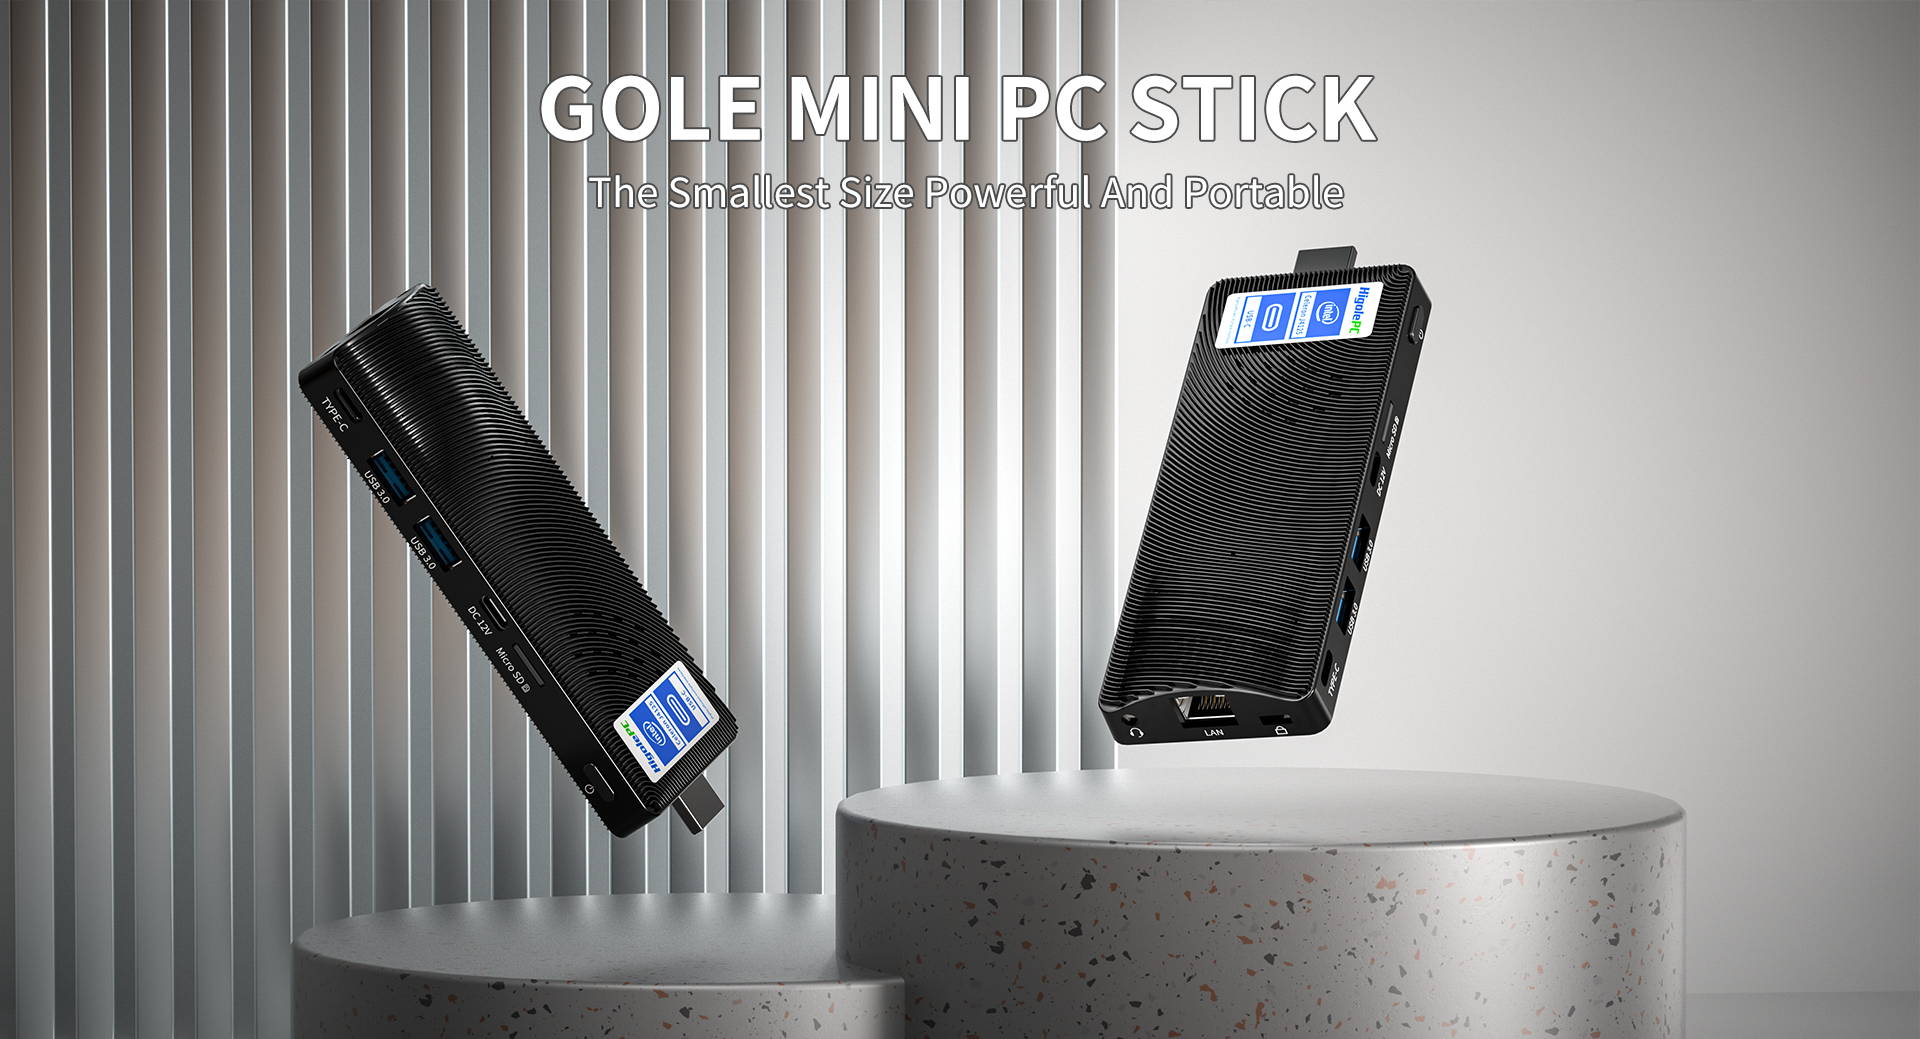 Goleminipc PC STICK